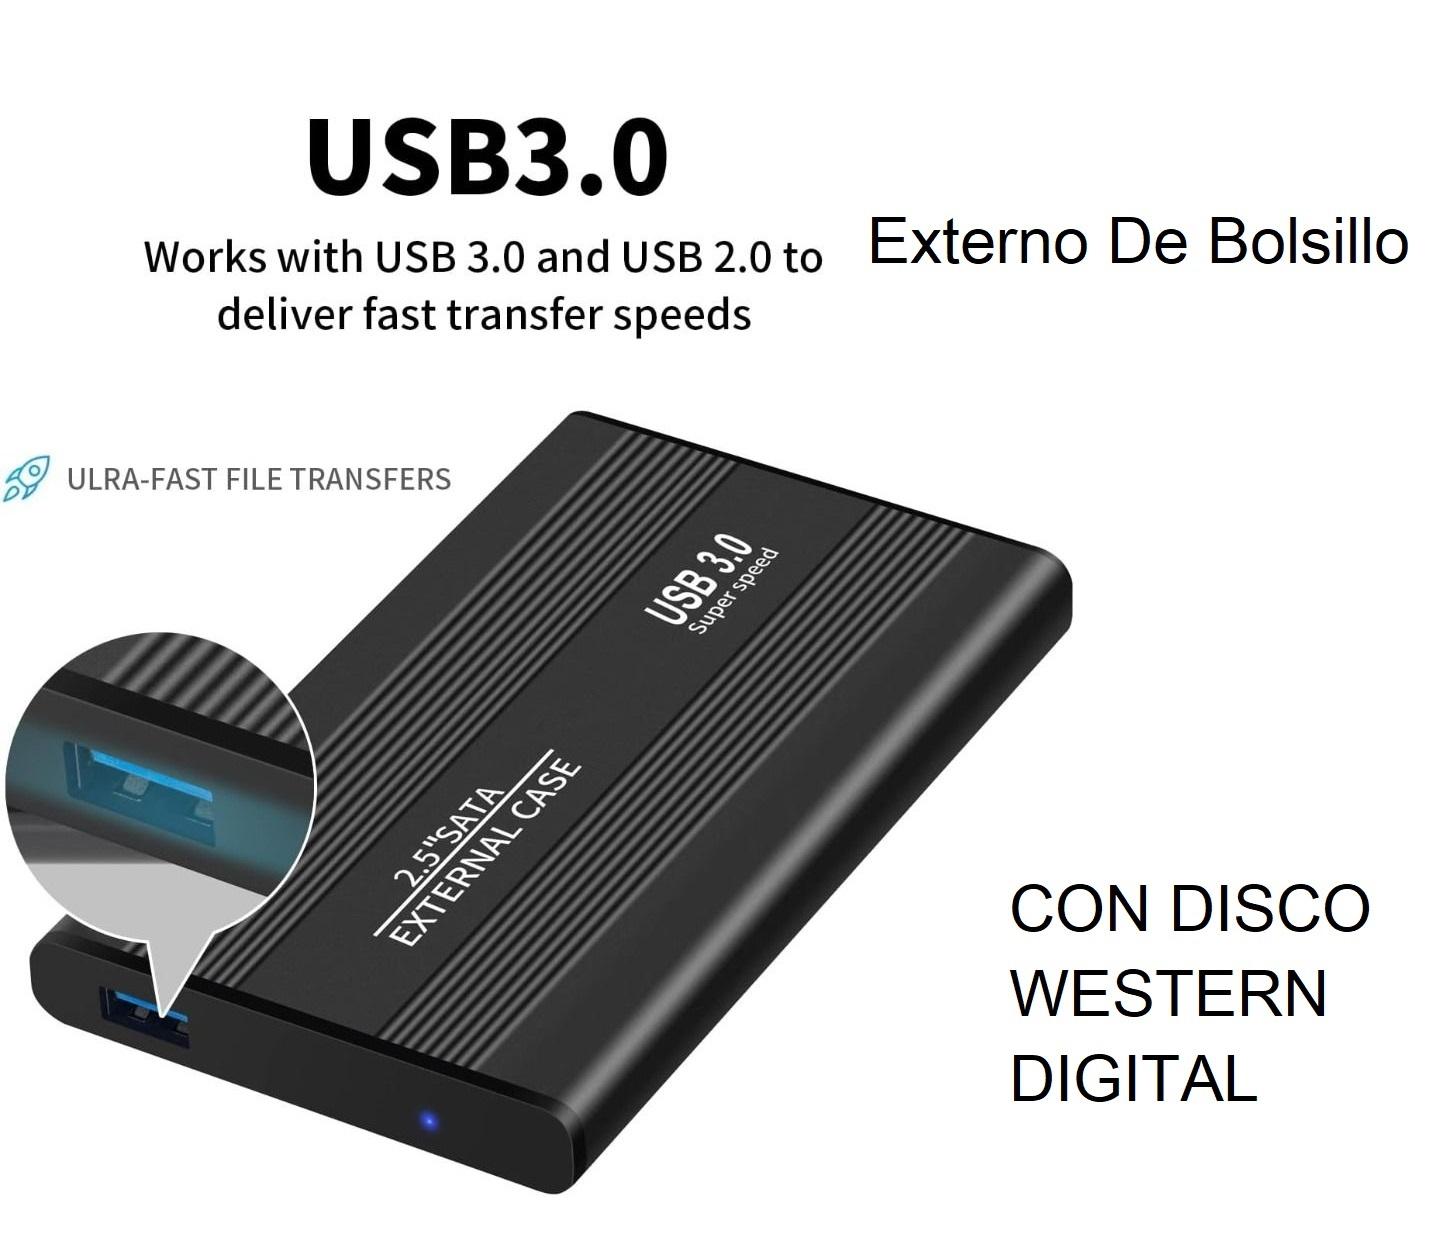 DISCO DURO EXTERNO USB 3.0 DE BOLSILLO NUEVO DESDE 1500 Foto 7196966-1.jpg